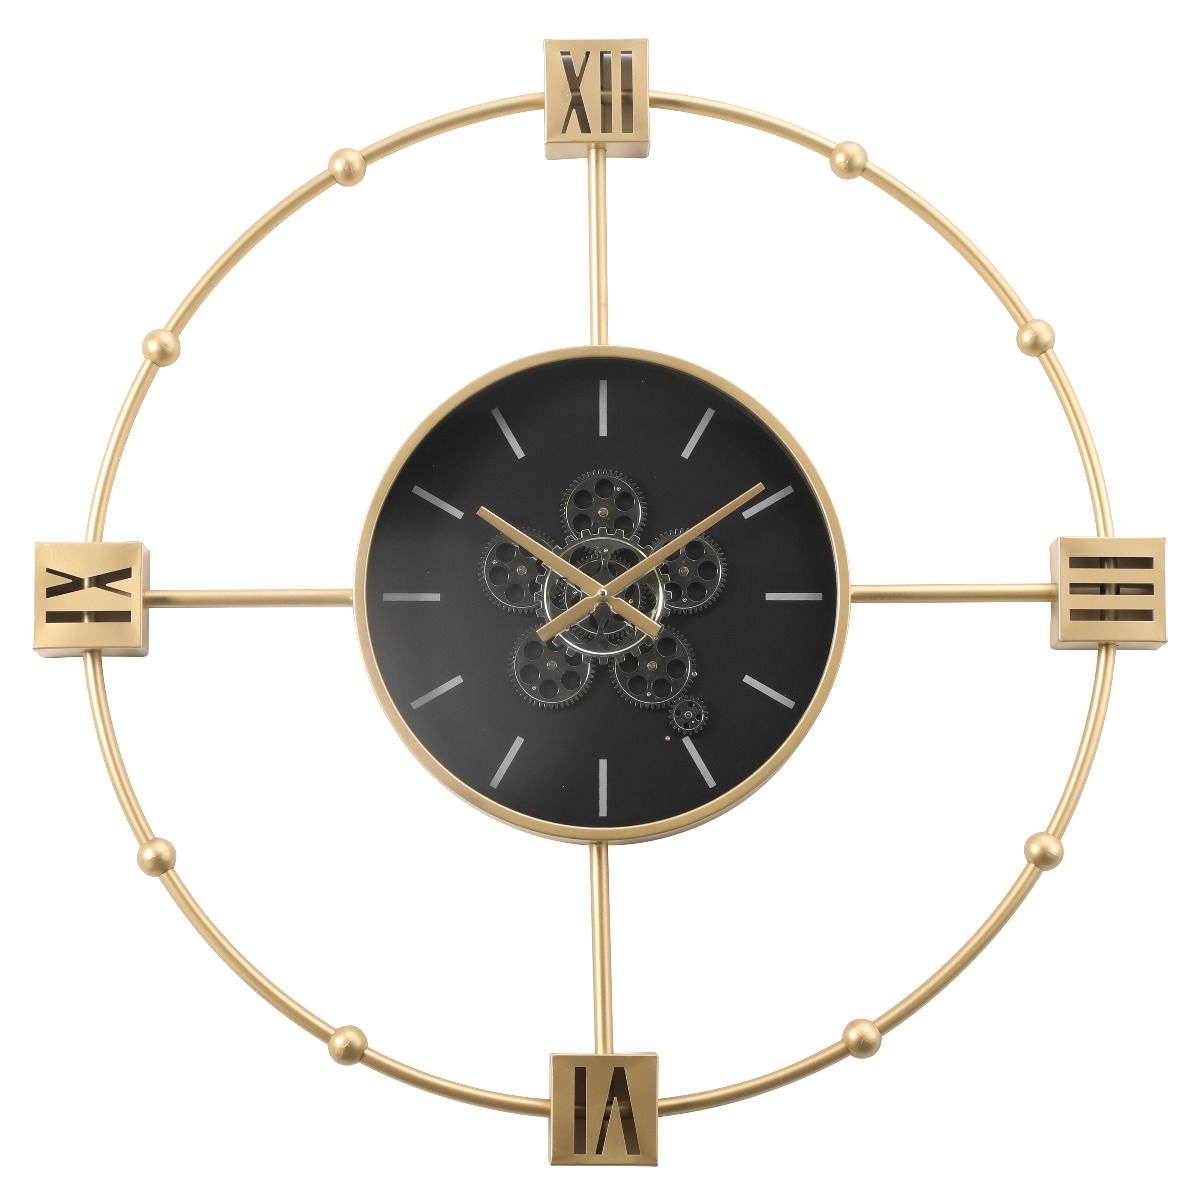 Industrial/vintage-inspired clock range - MODEL 022